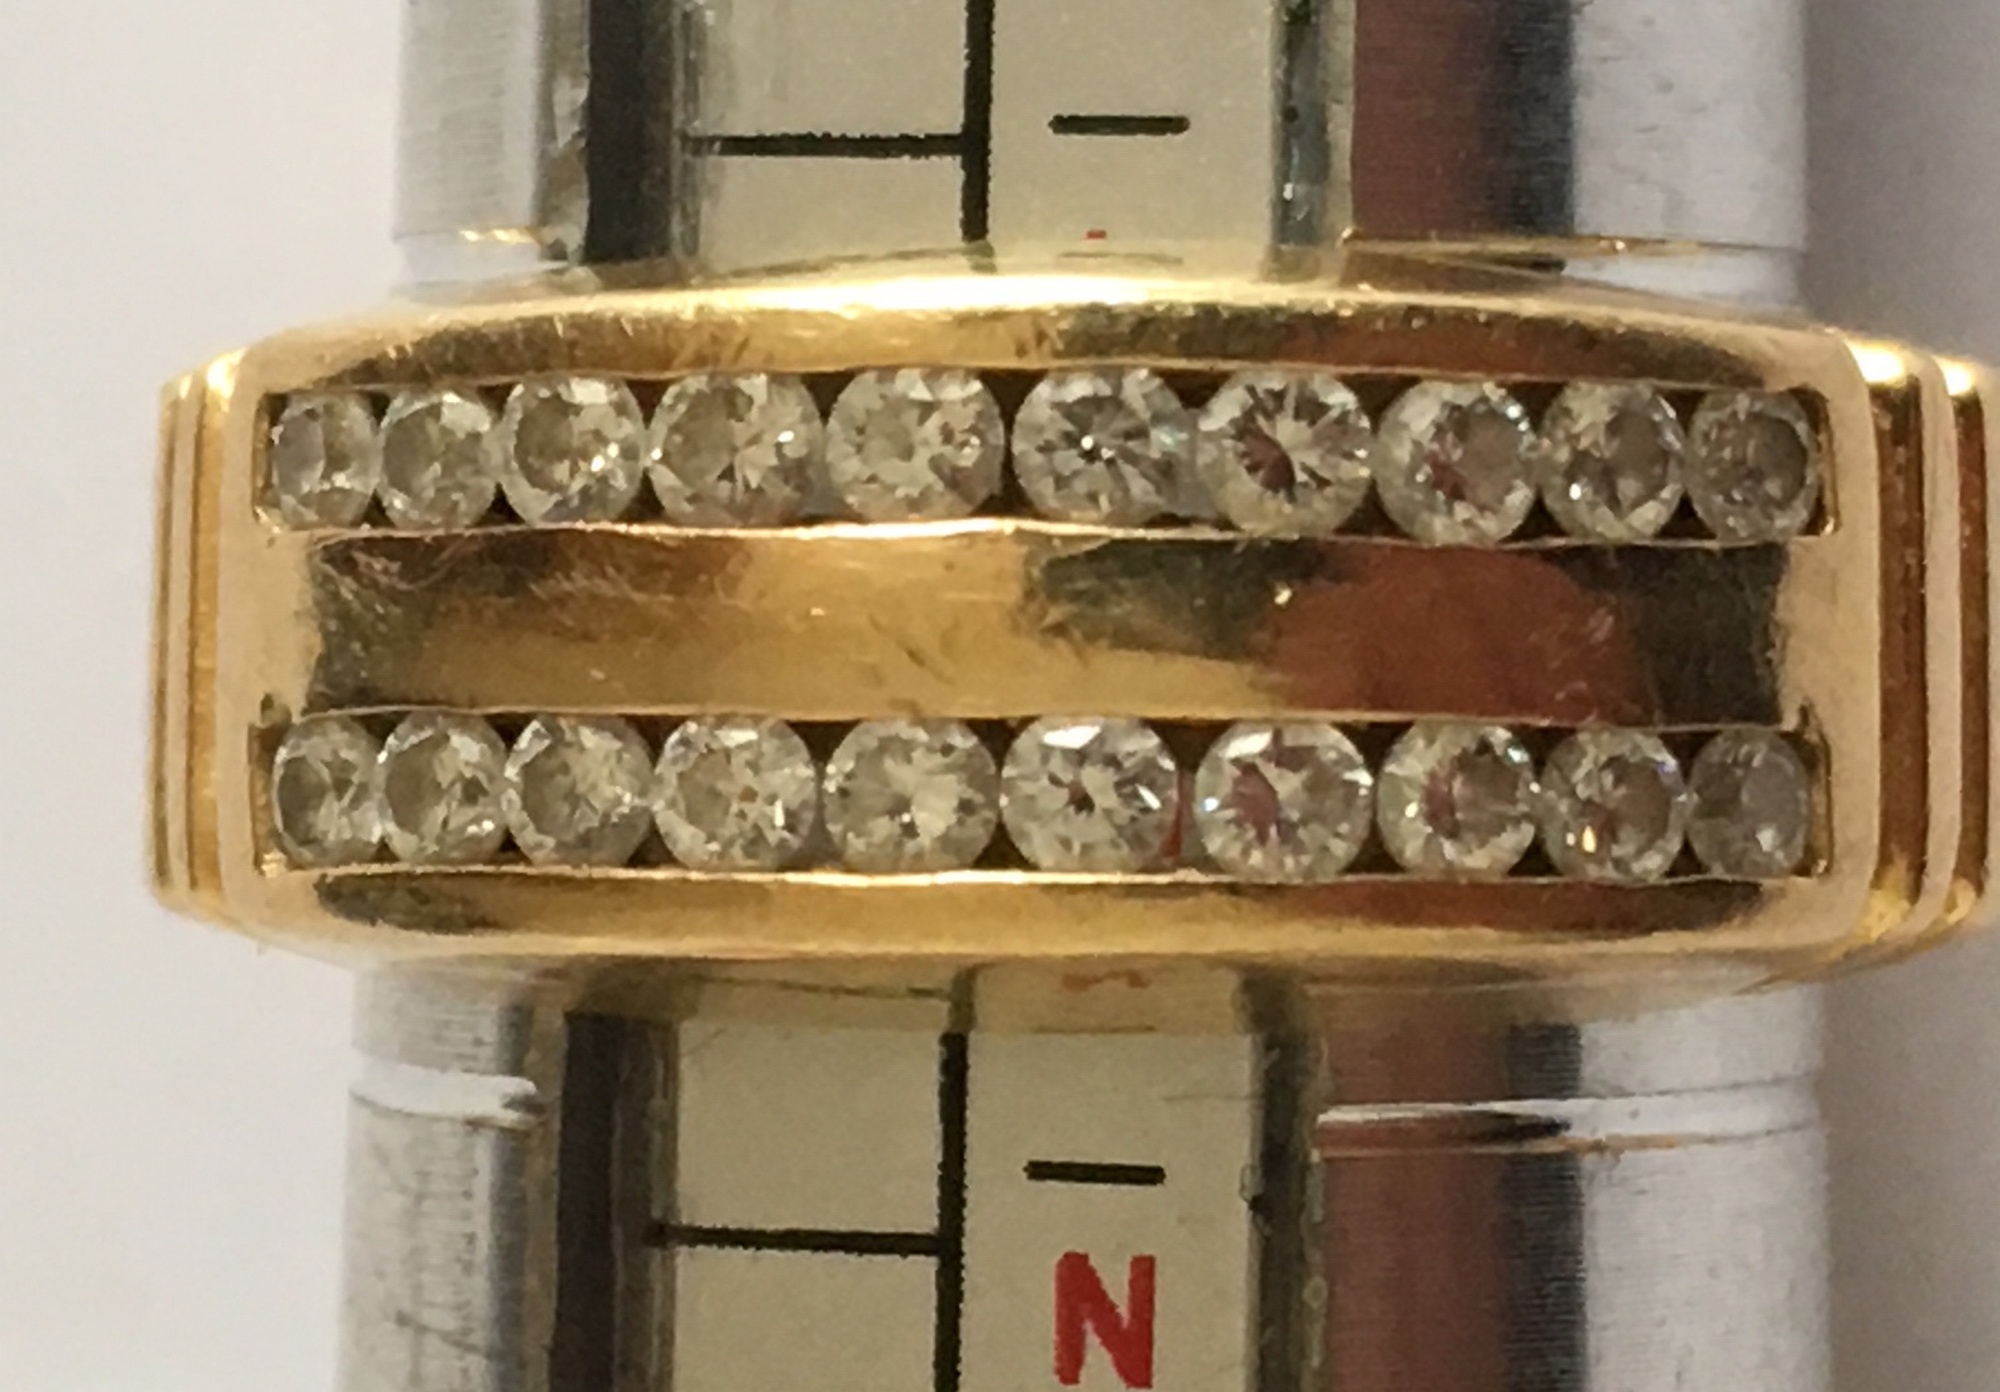 18 karat Gold Ring set with 20 diamonds - UK size L 1/2 - 8.4 grams total weight. - Image 2 of 5